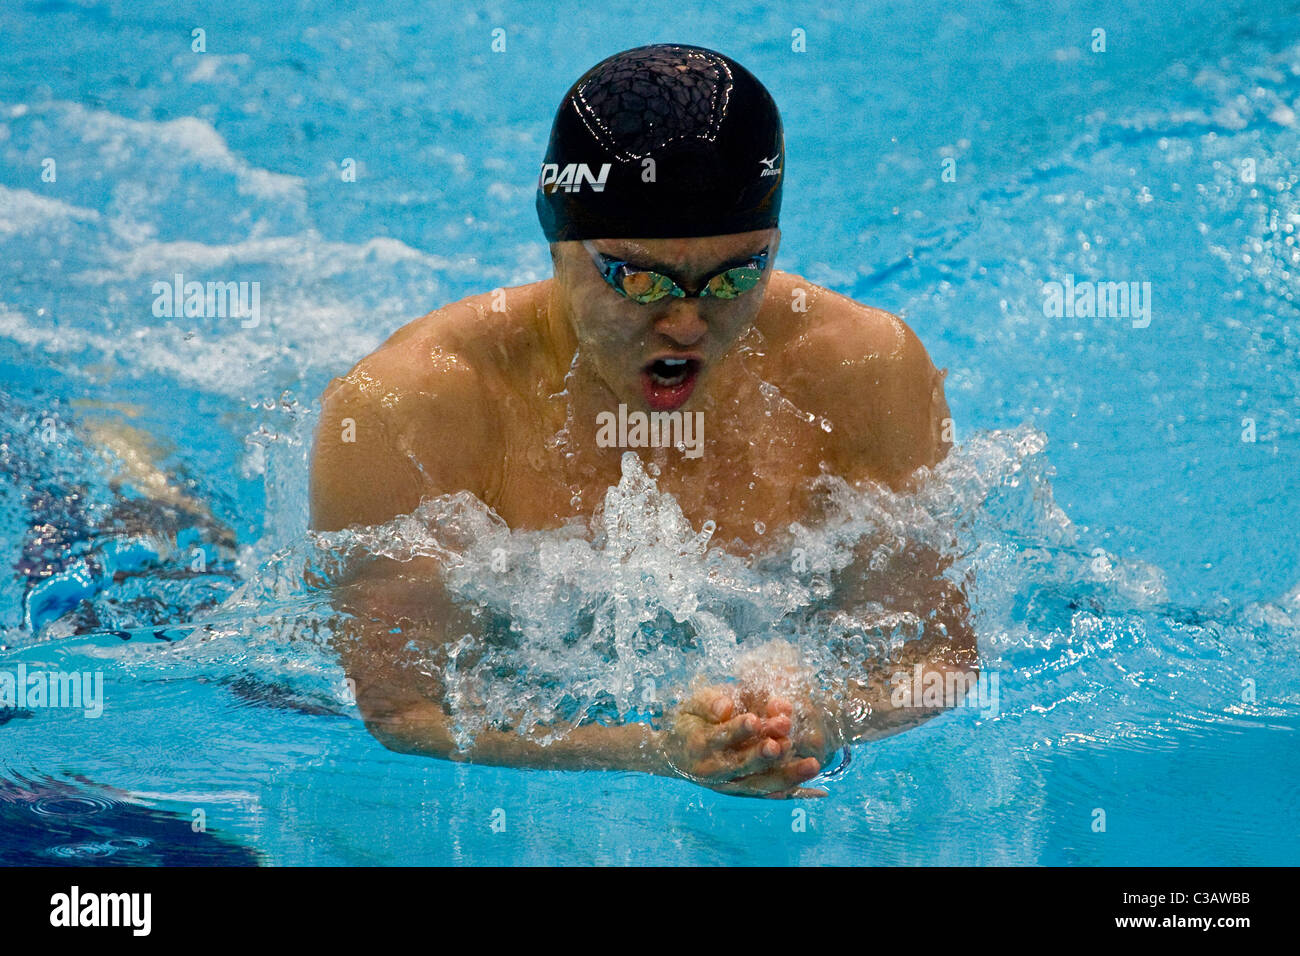 Kosuke Kitajima (JPN) on his way to winning the gold medal in the 200m breaststroke at the 2008 Olympics Stock Photo